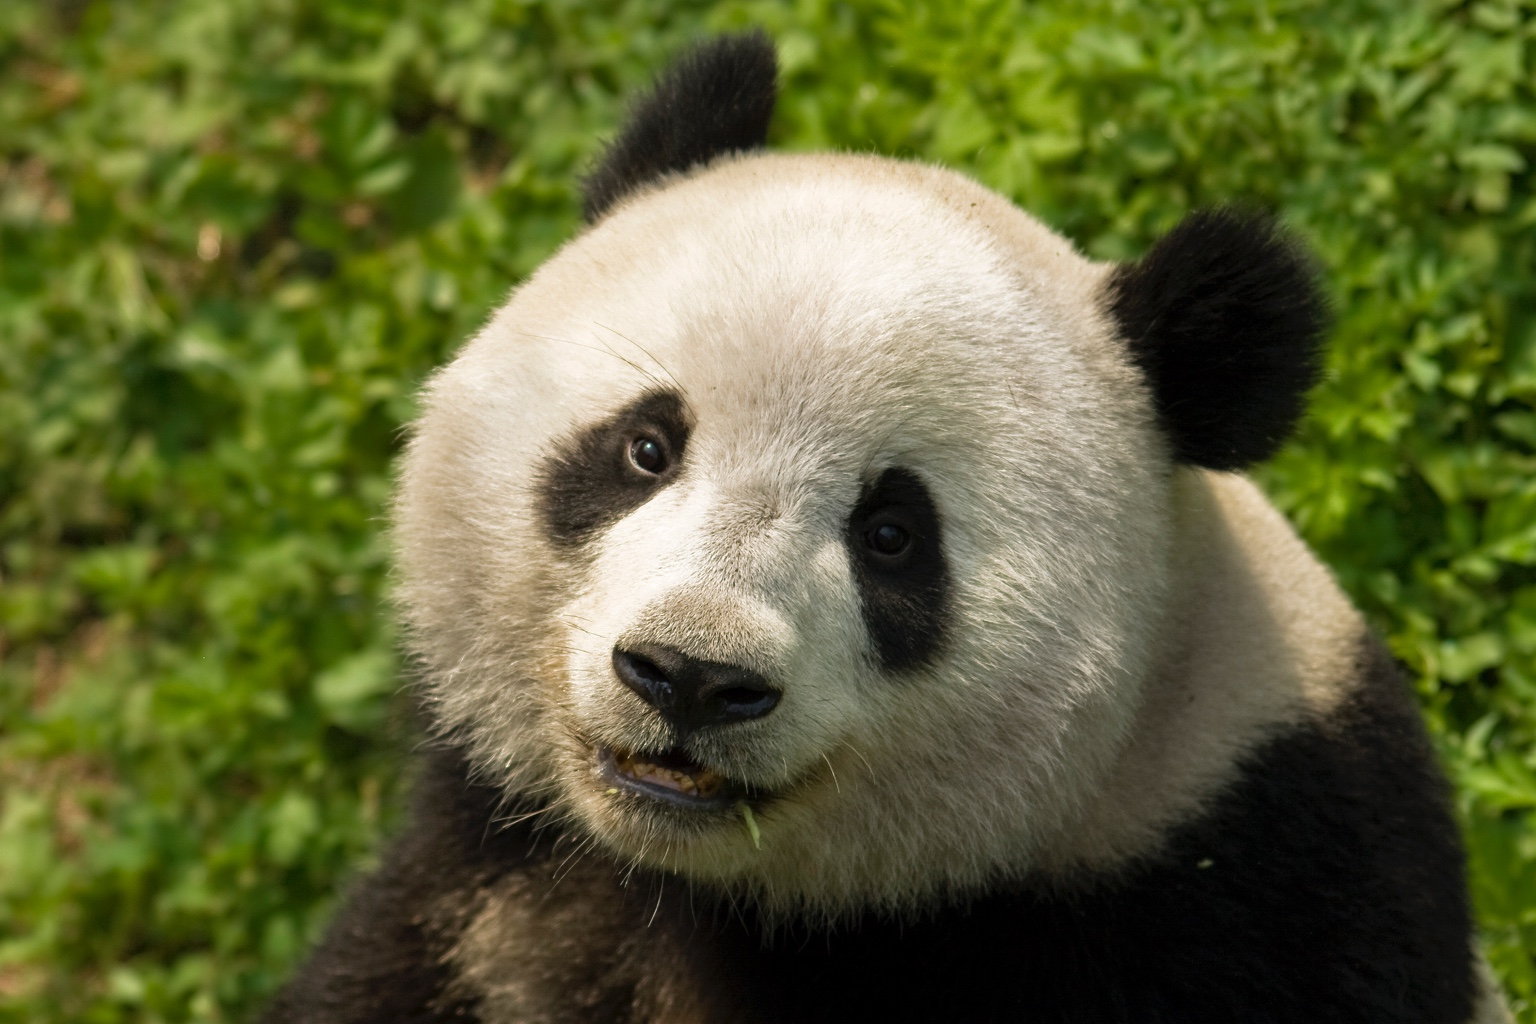 Adopt a Panda - Charity Gifts